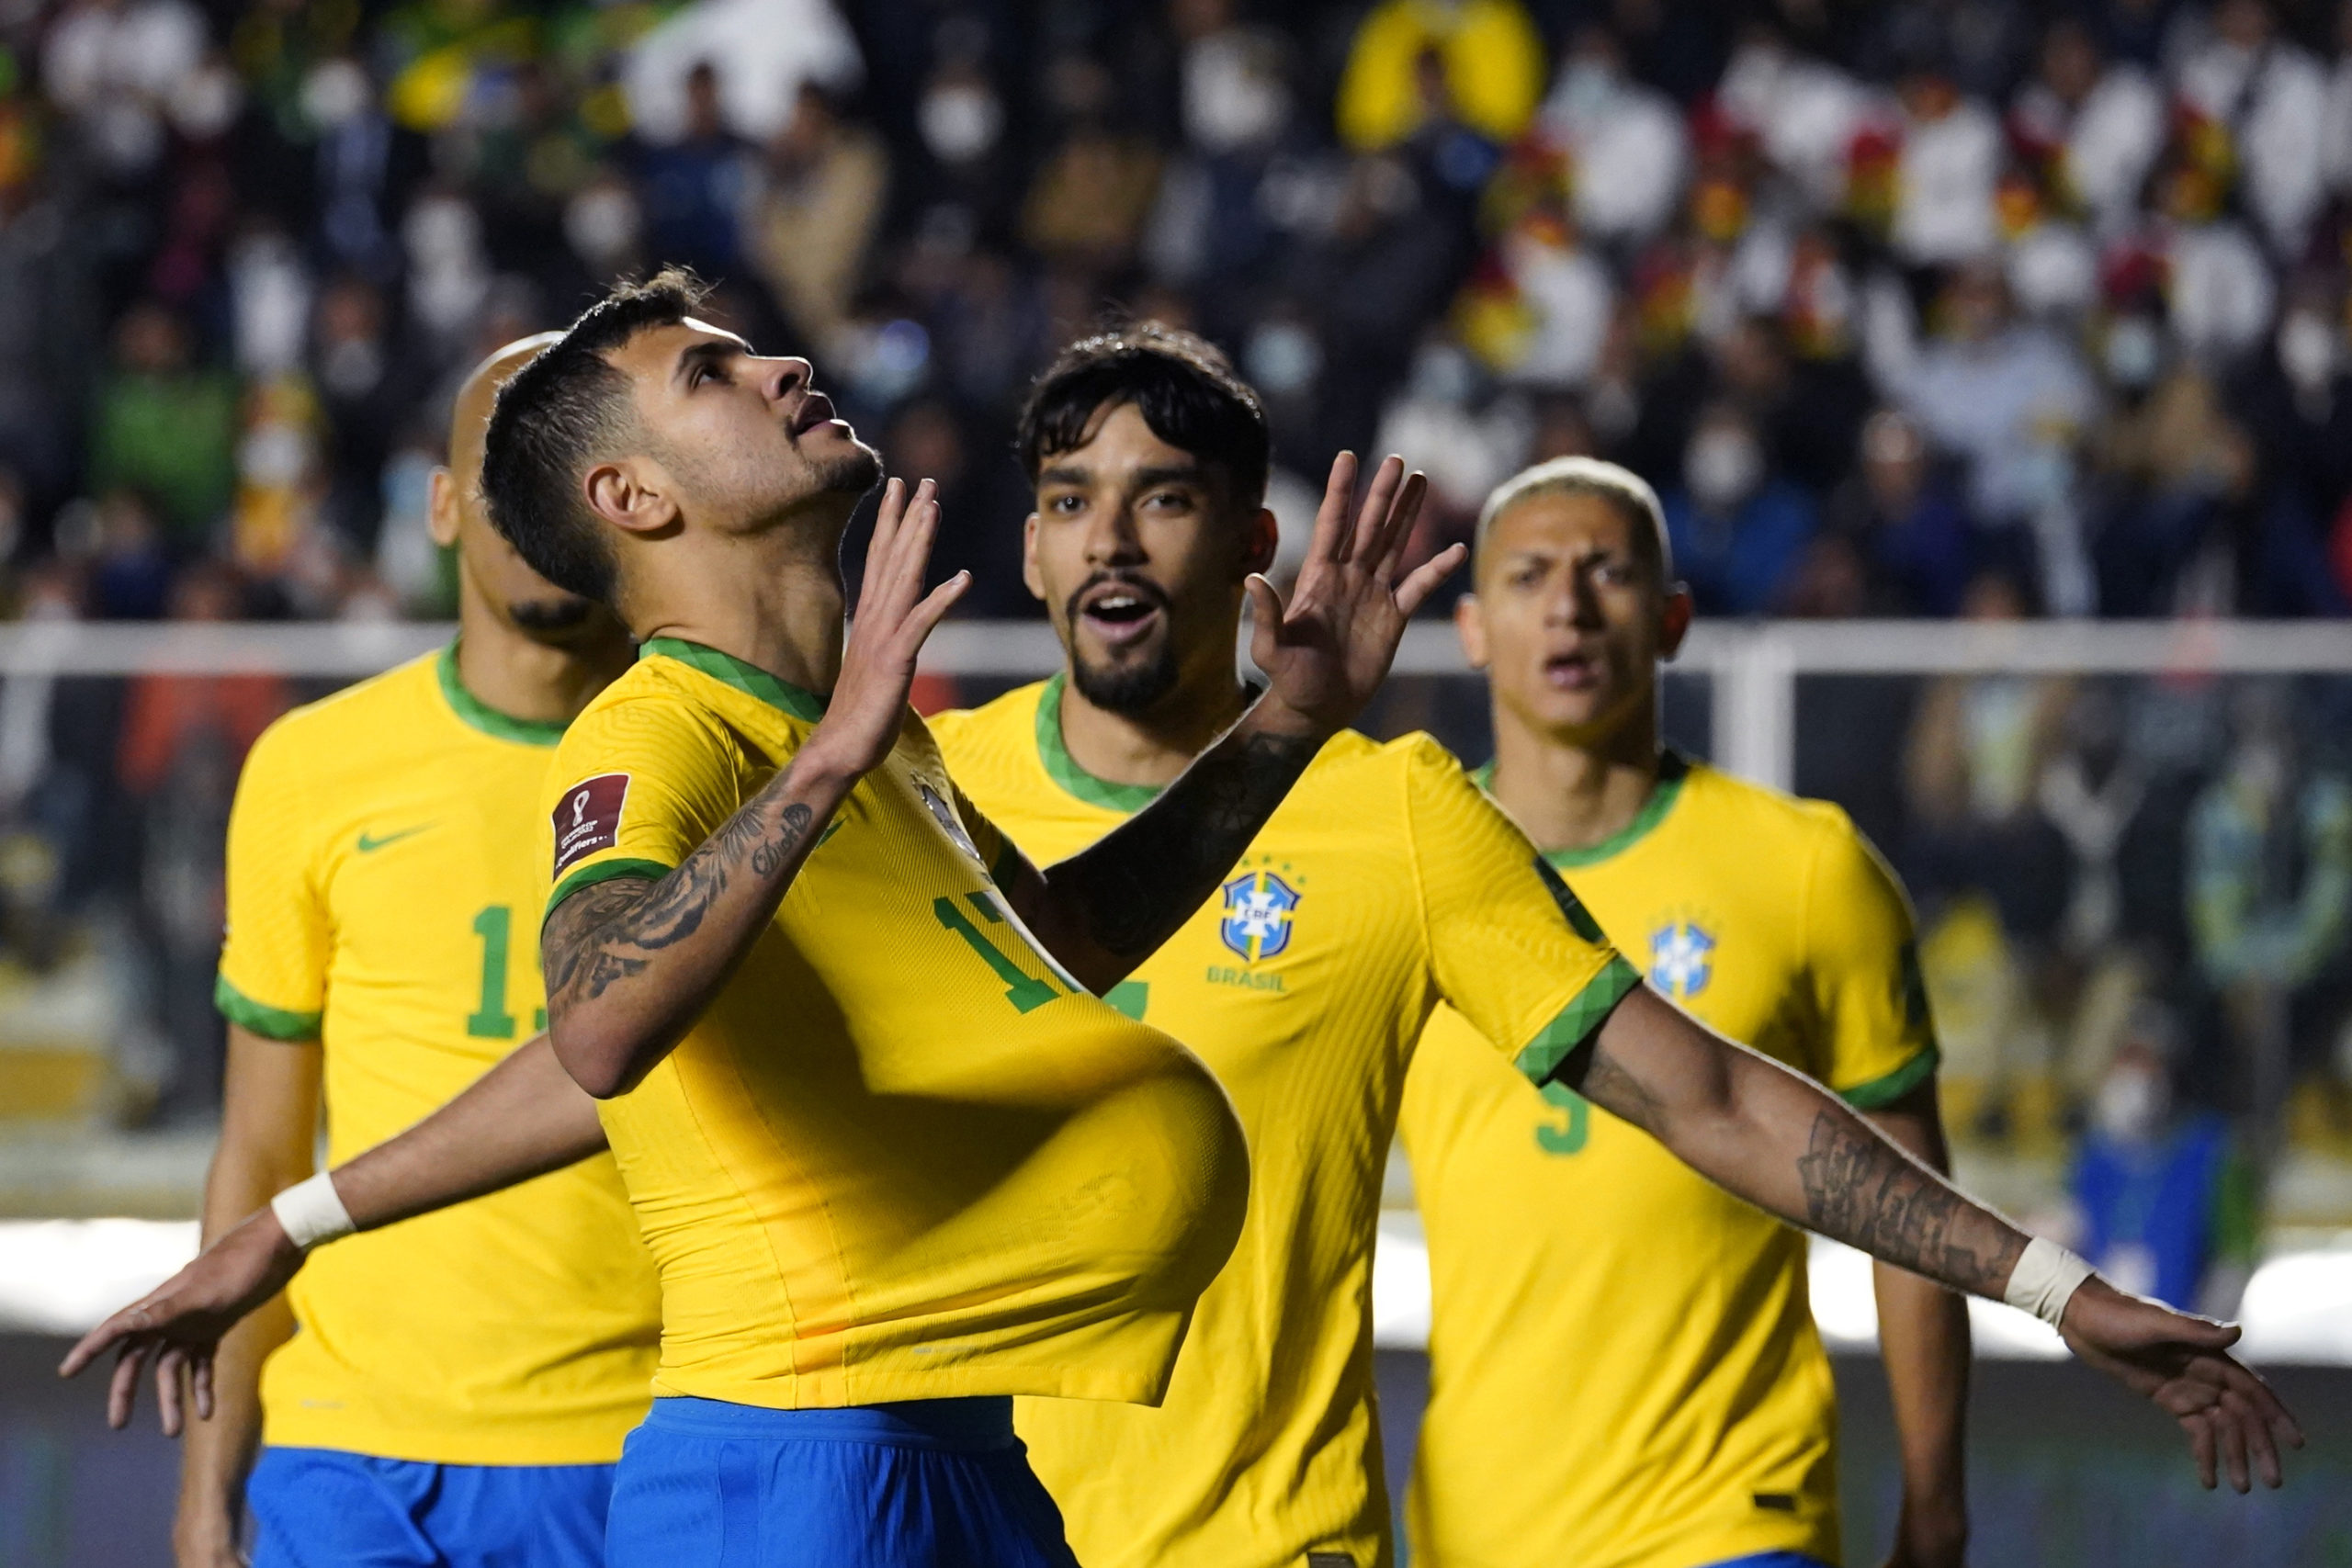 Newcastle star Bruno Guimaraes helps Brazil claim top spot in the world